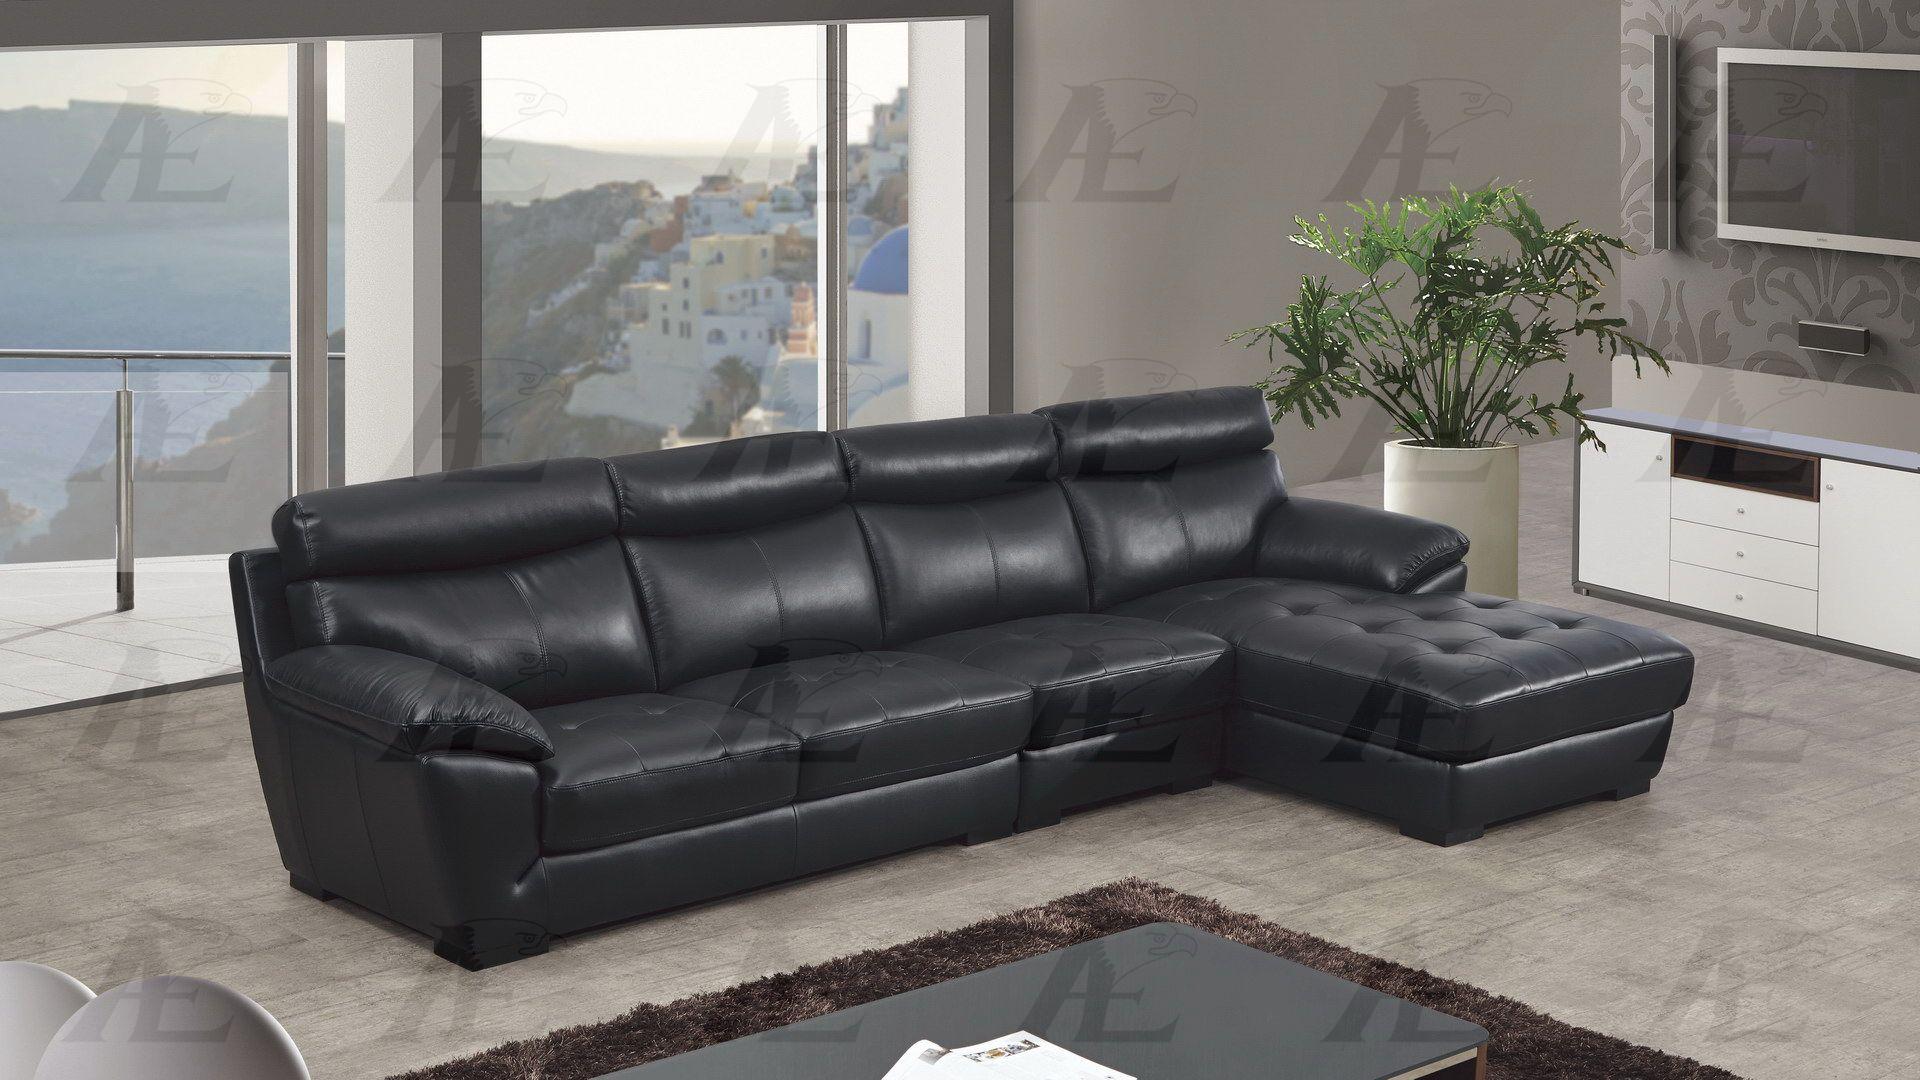 

    
American Eagle Furniture EK-L021-BK Sectional Sofa Black EK-L021L-BK
